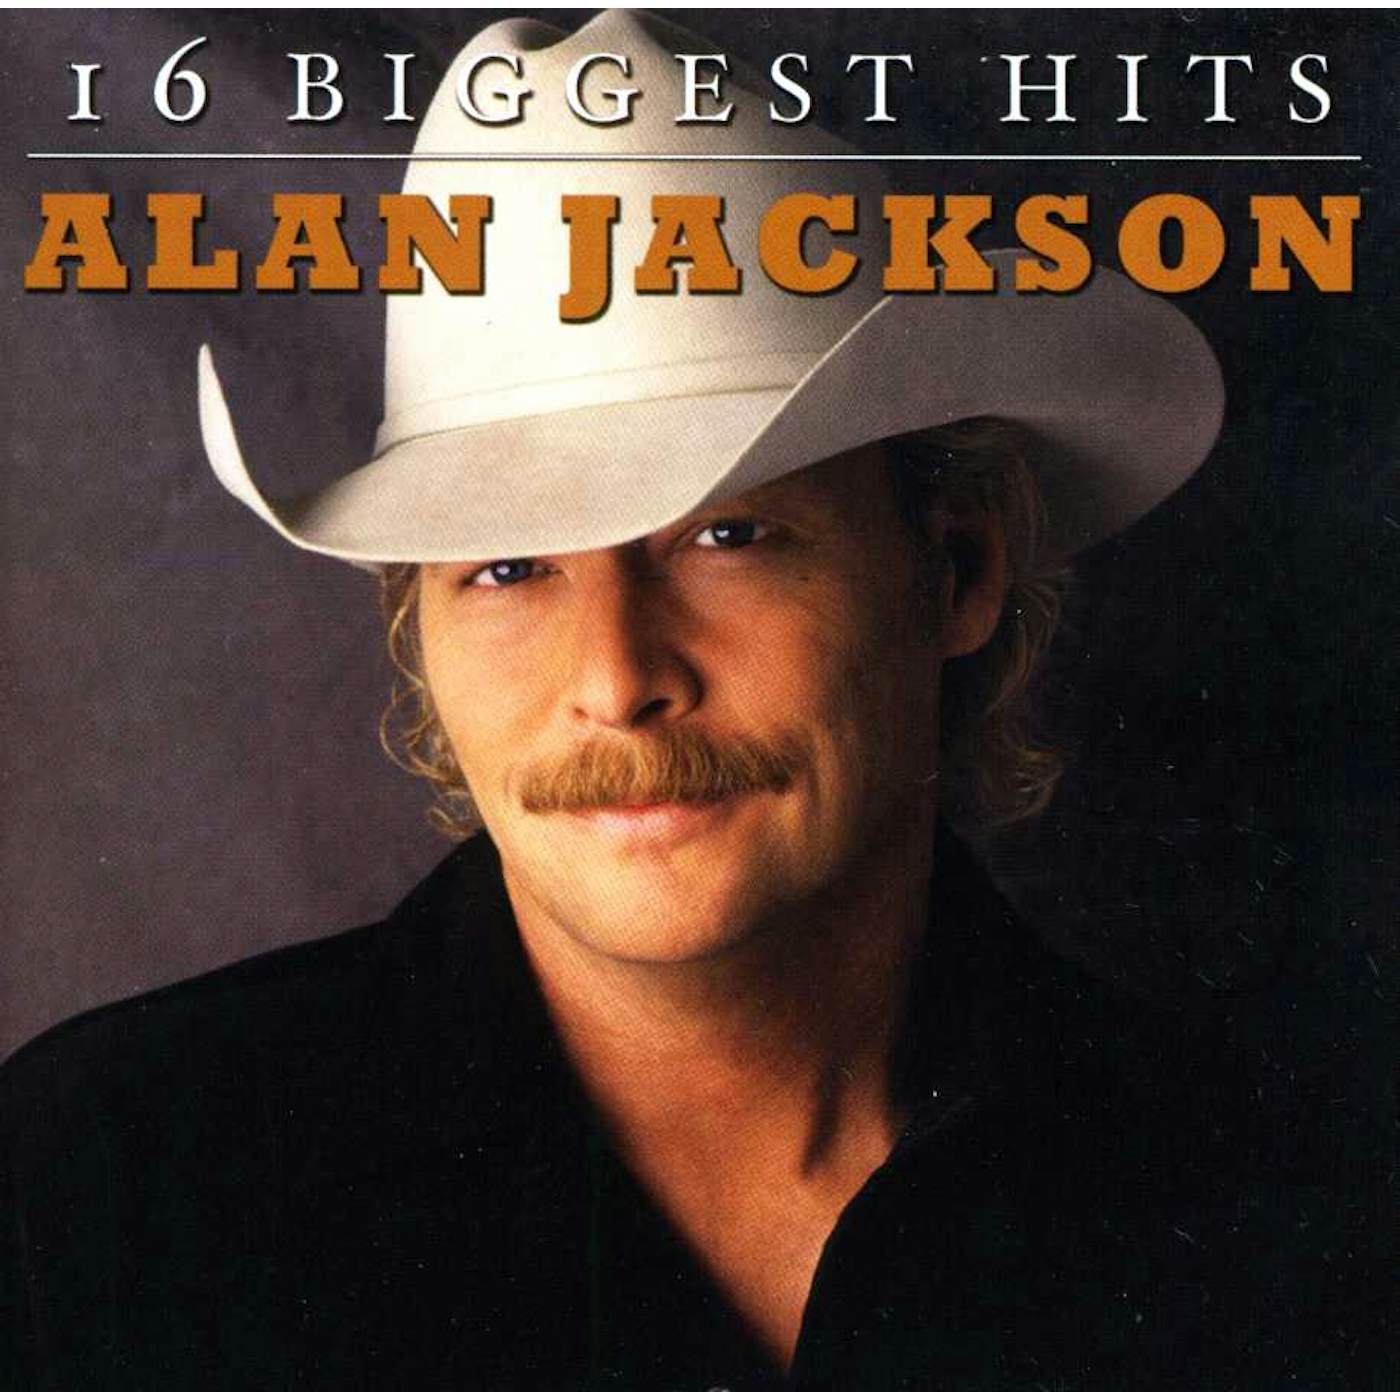 Alan Jackson 16 BIGGEST HITS CD